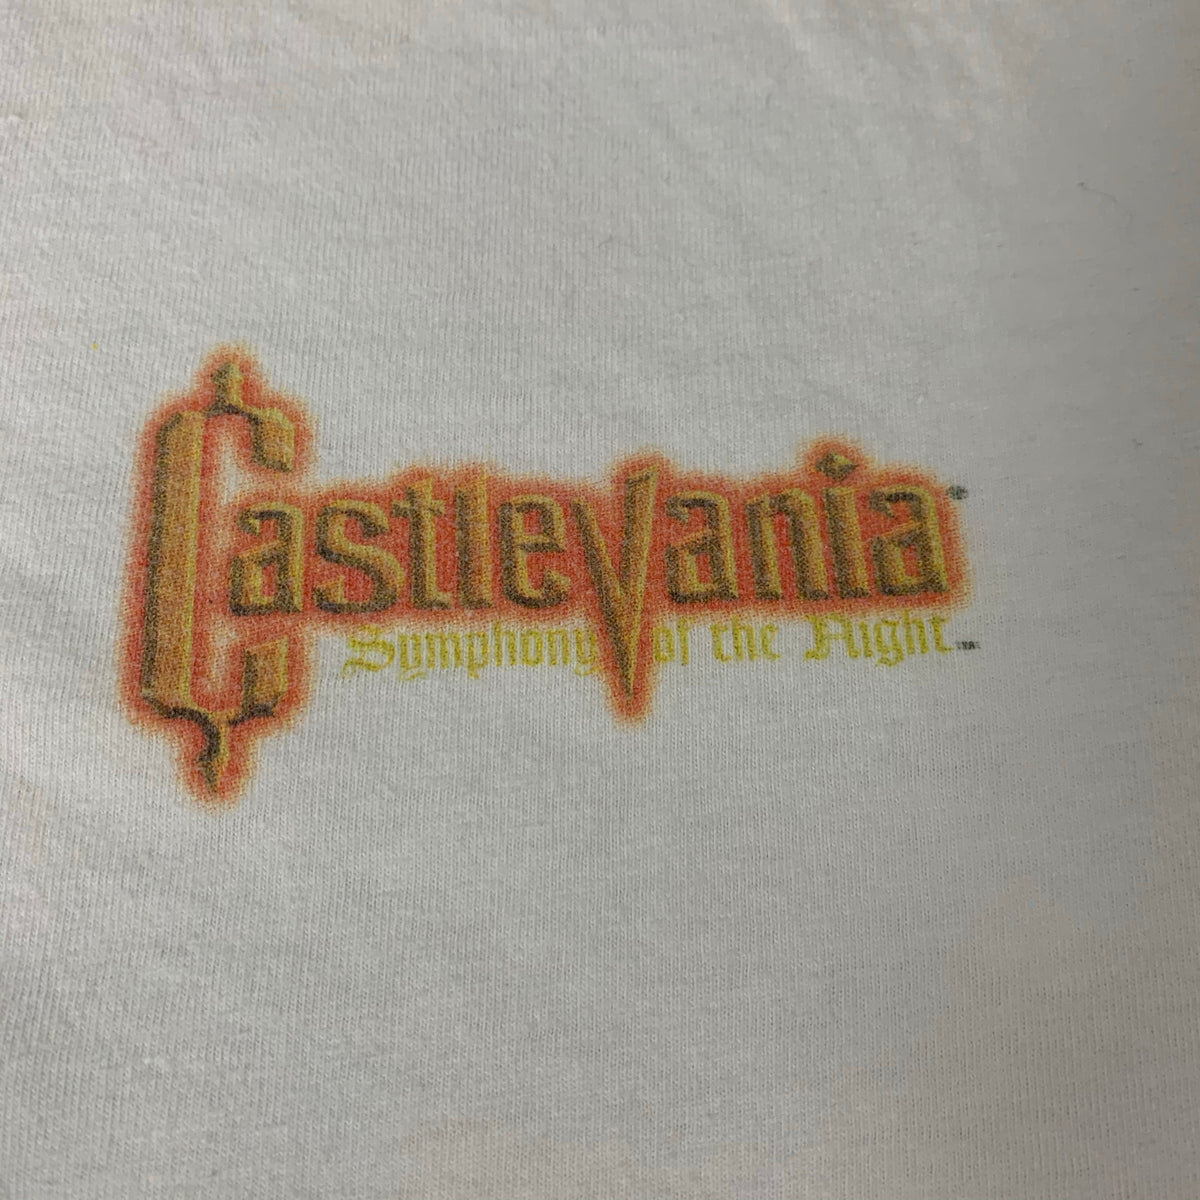 Vintage Castlevania “Symphony Of The Night” T-Shirt